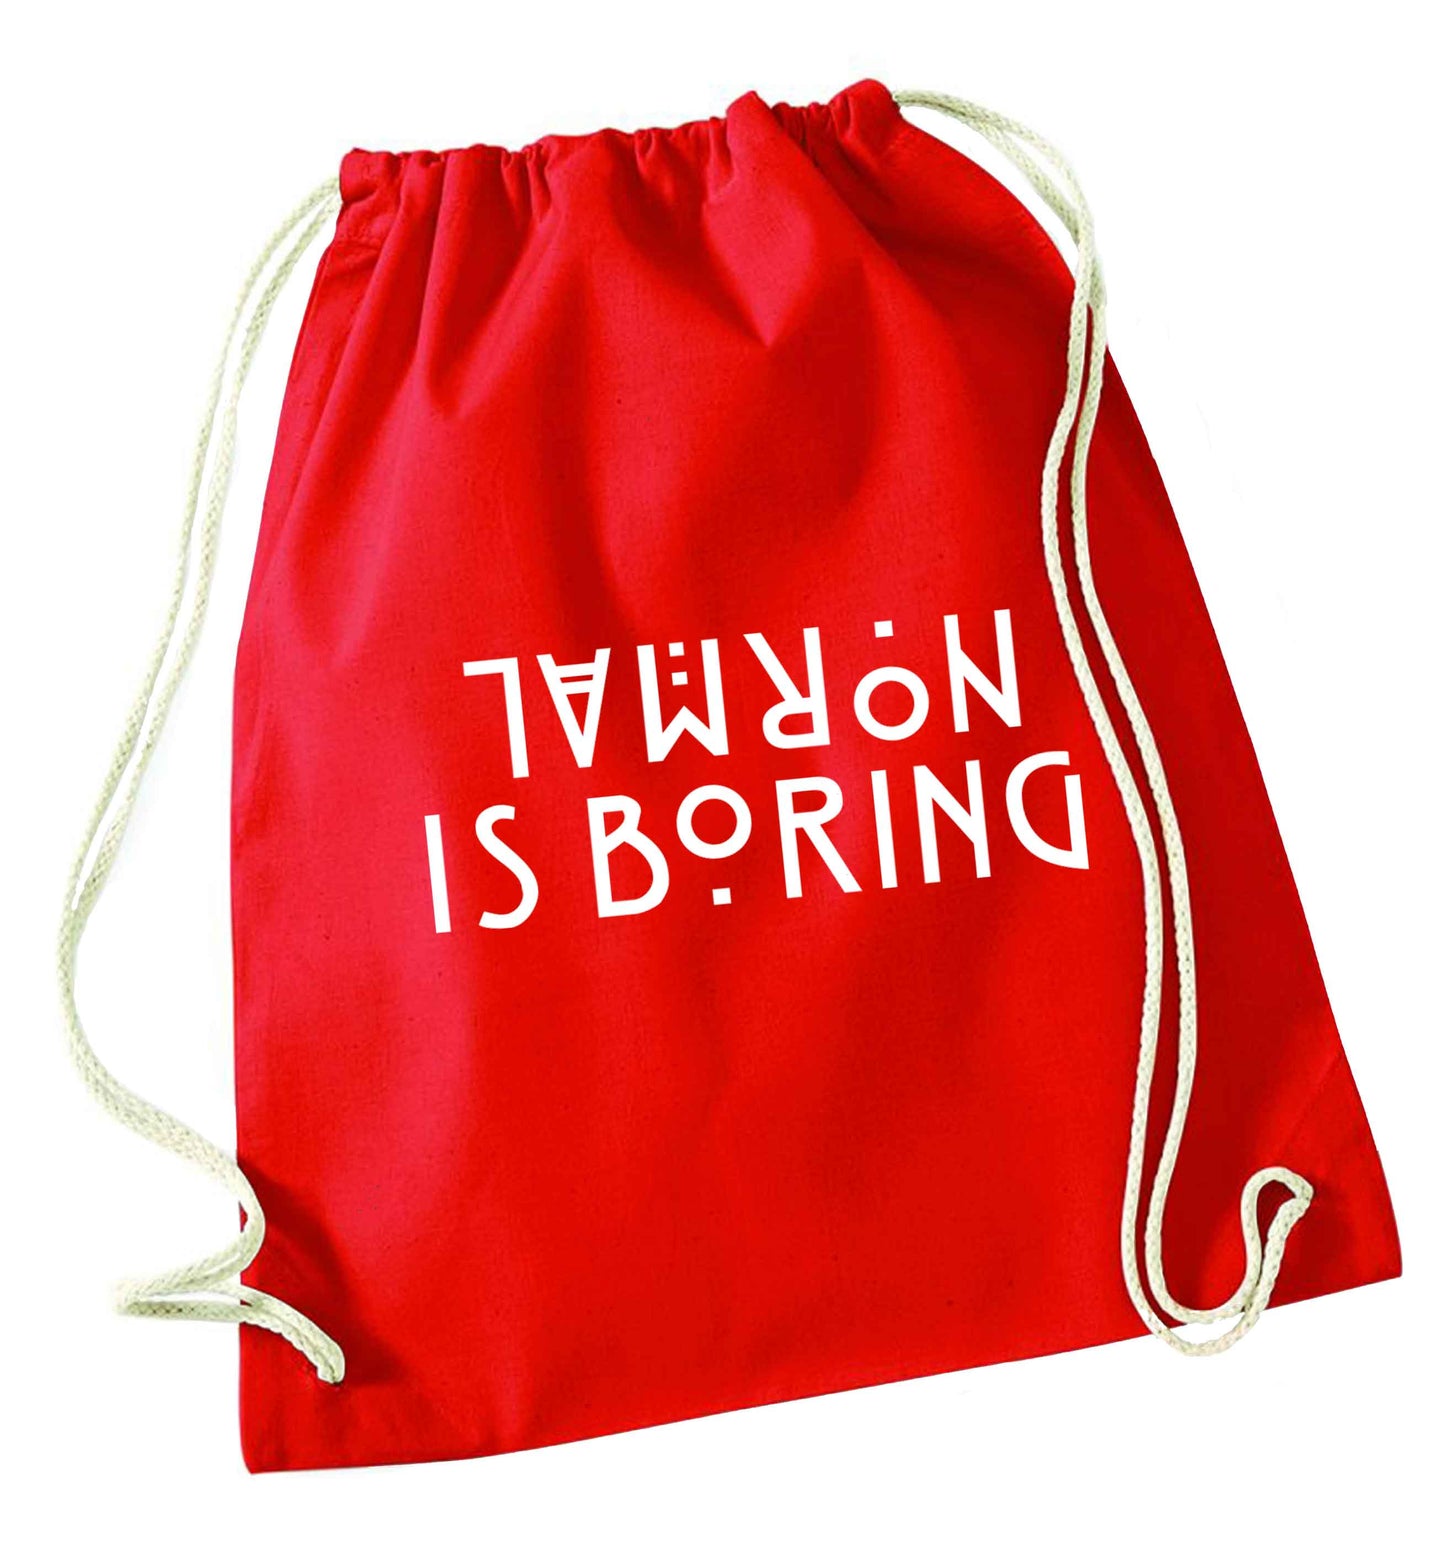 Normal is boring red drawstring bag 